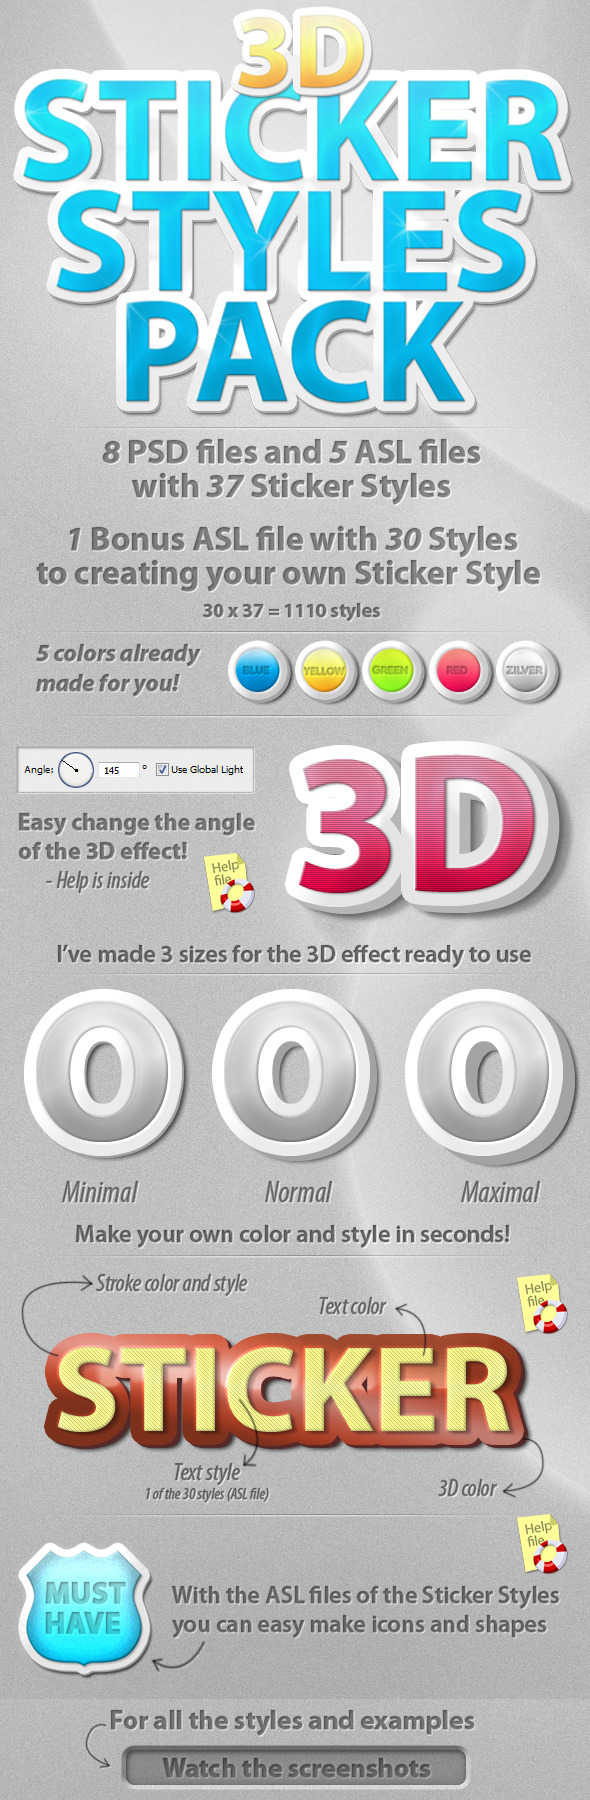 3D Sticker Styles Pack